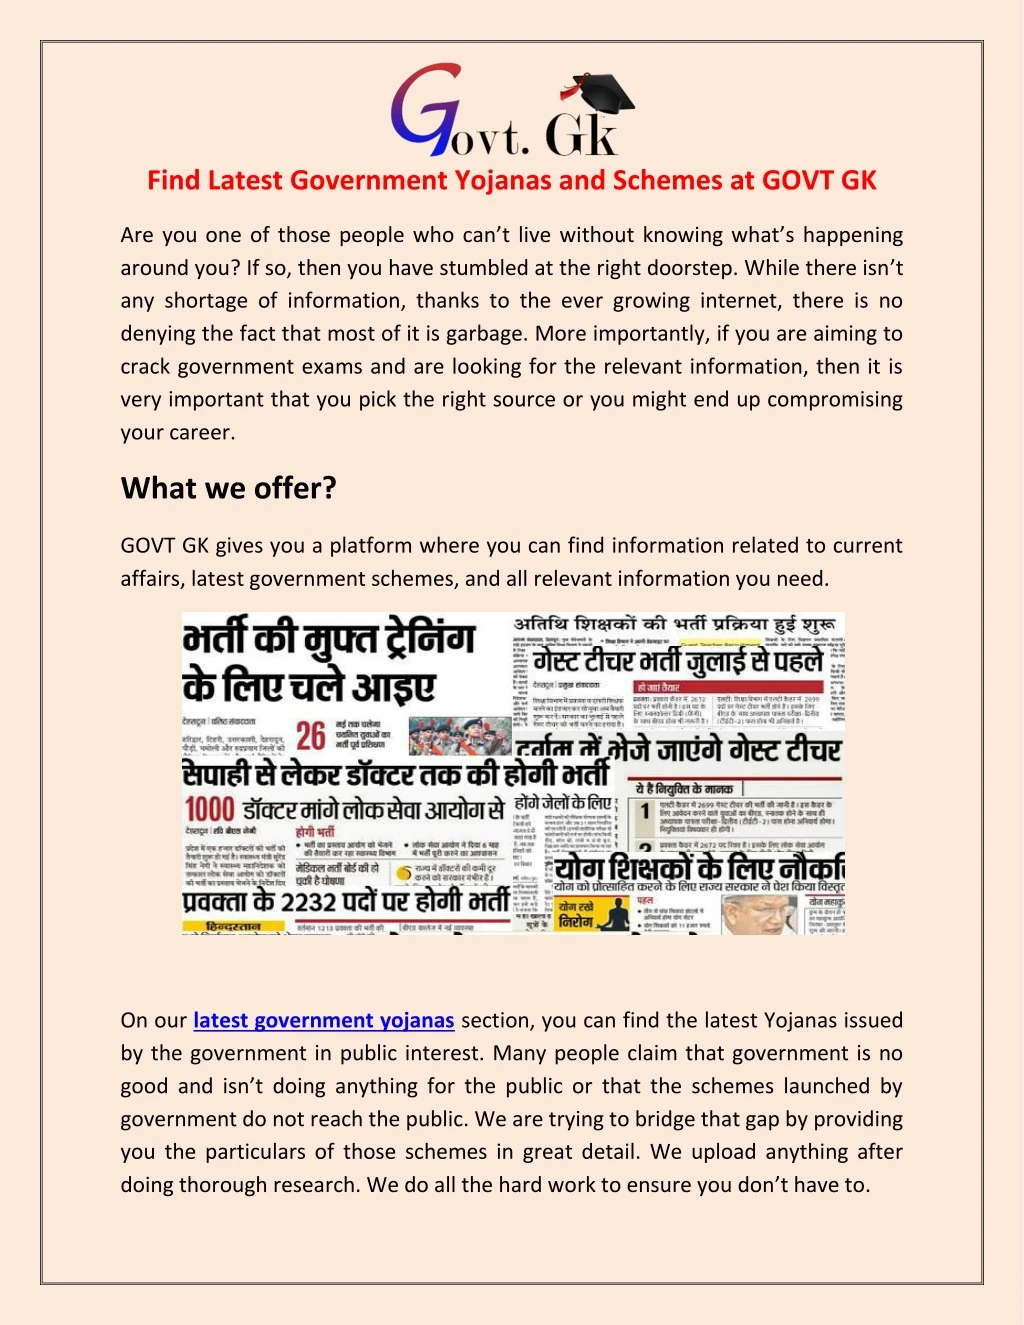 find latest government yojanas and schemes